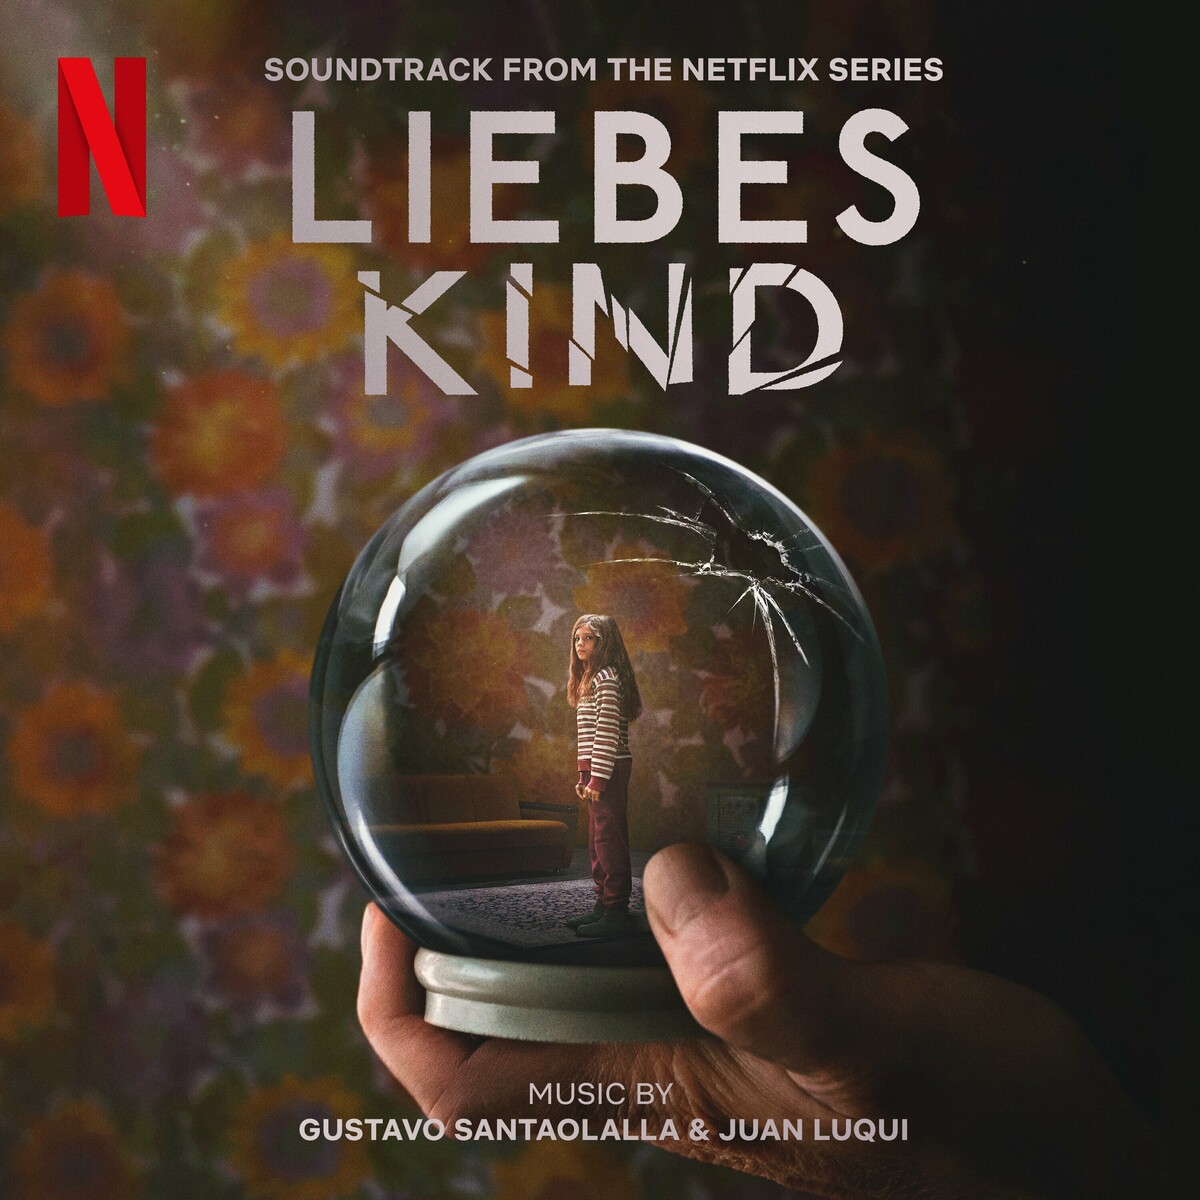 Liebes Kind (Dear Child) Soundtrack (by Gustavo Santaolalla, Juan Luqui) -- Seeders: 1 -- Leechers: 0